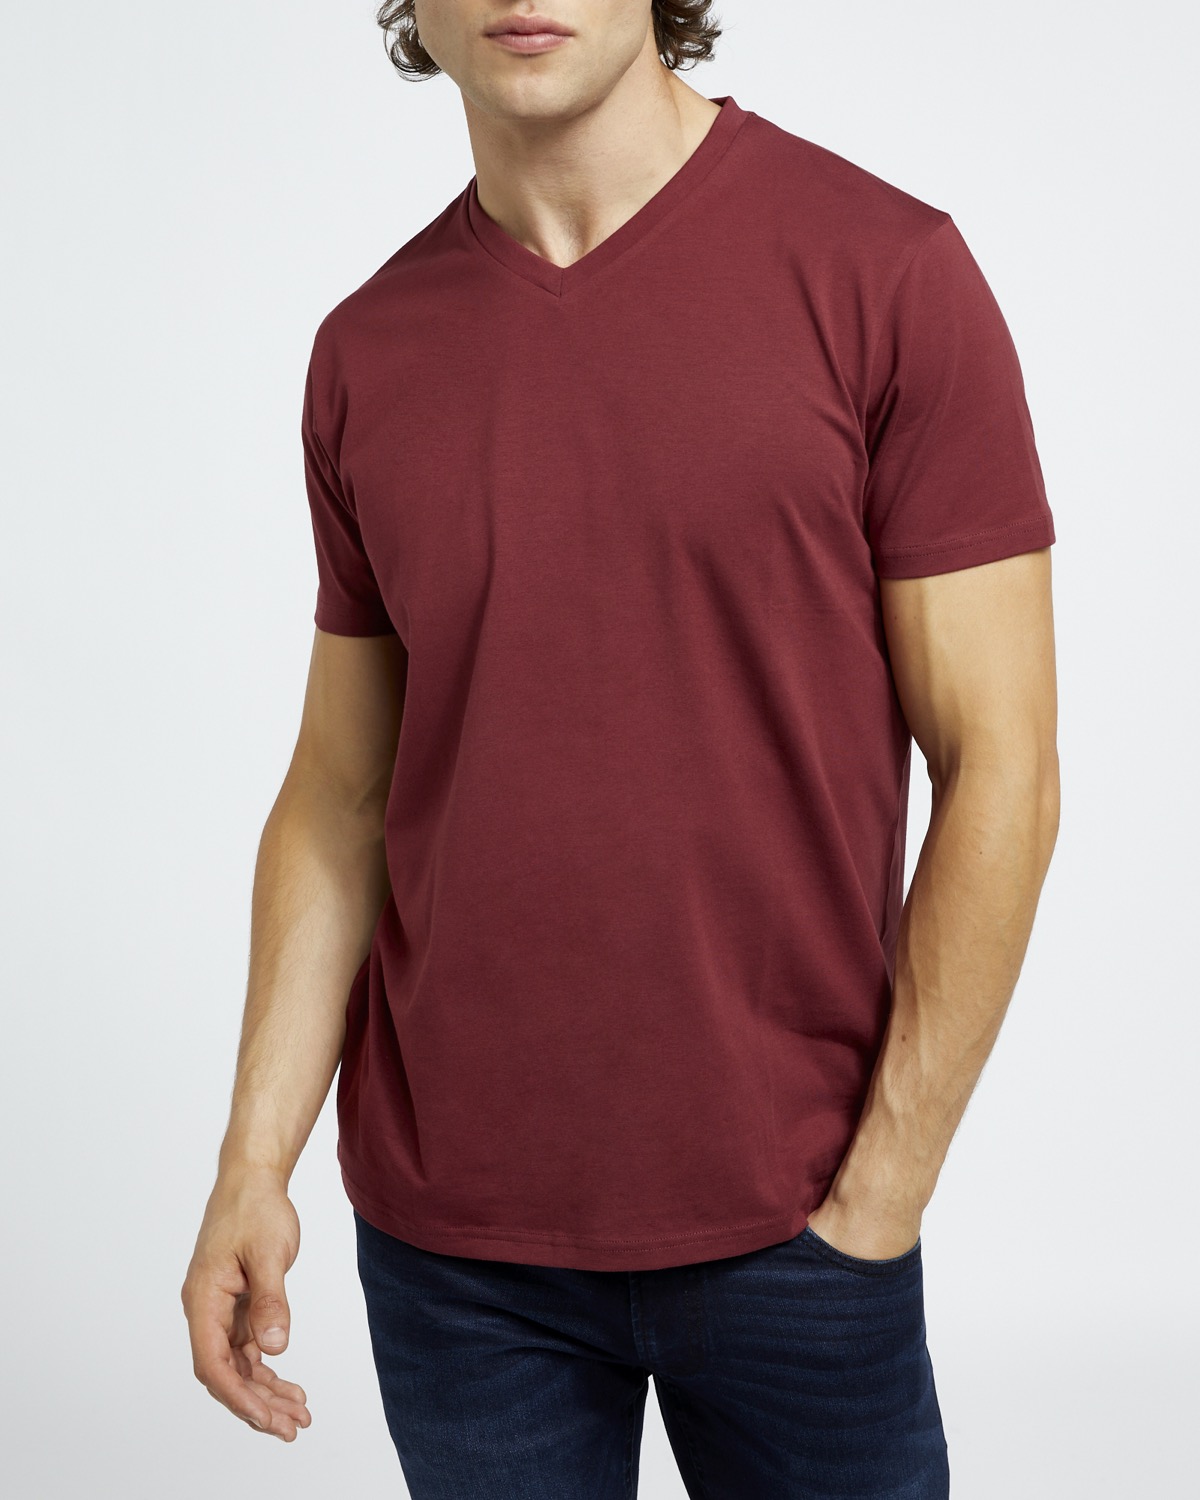 plain maroon t shirt v neck